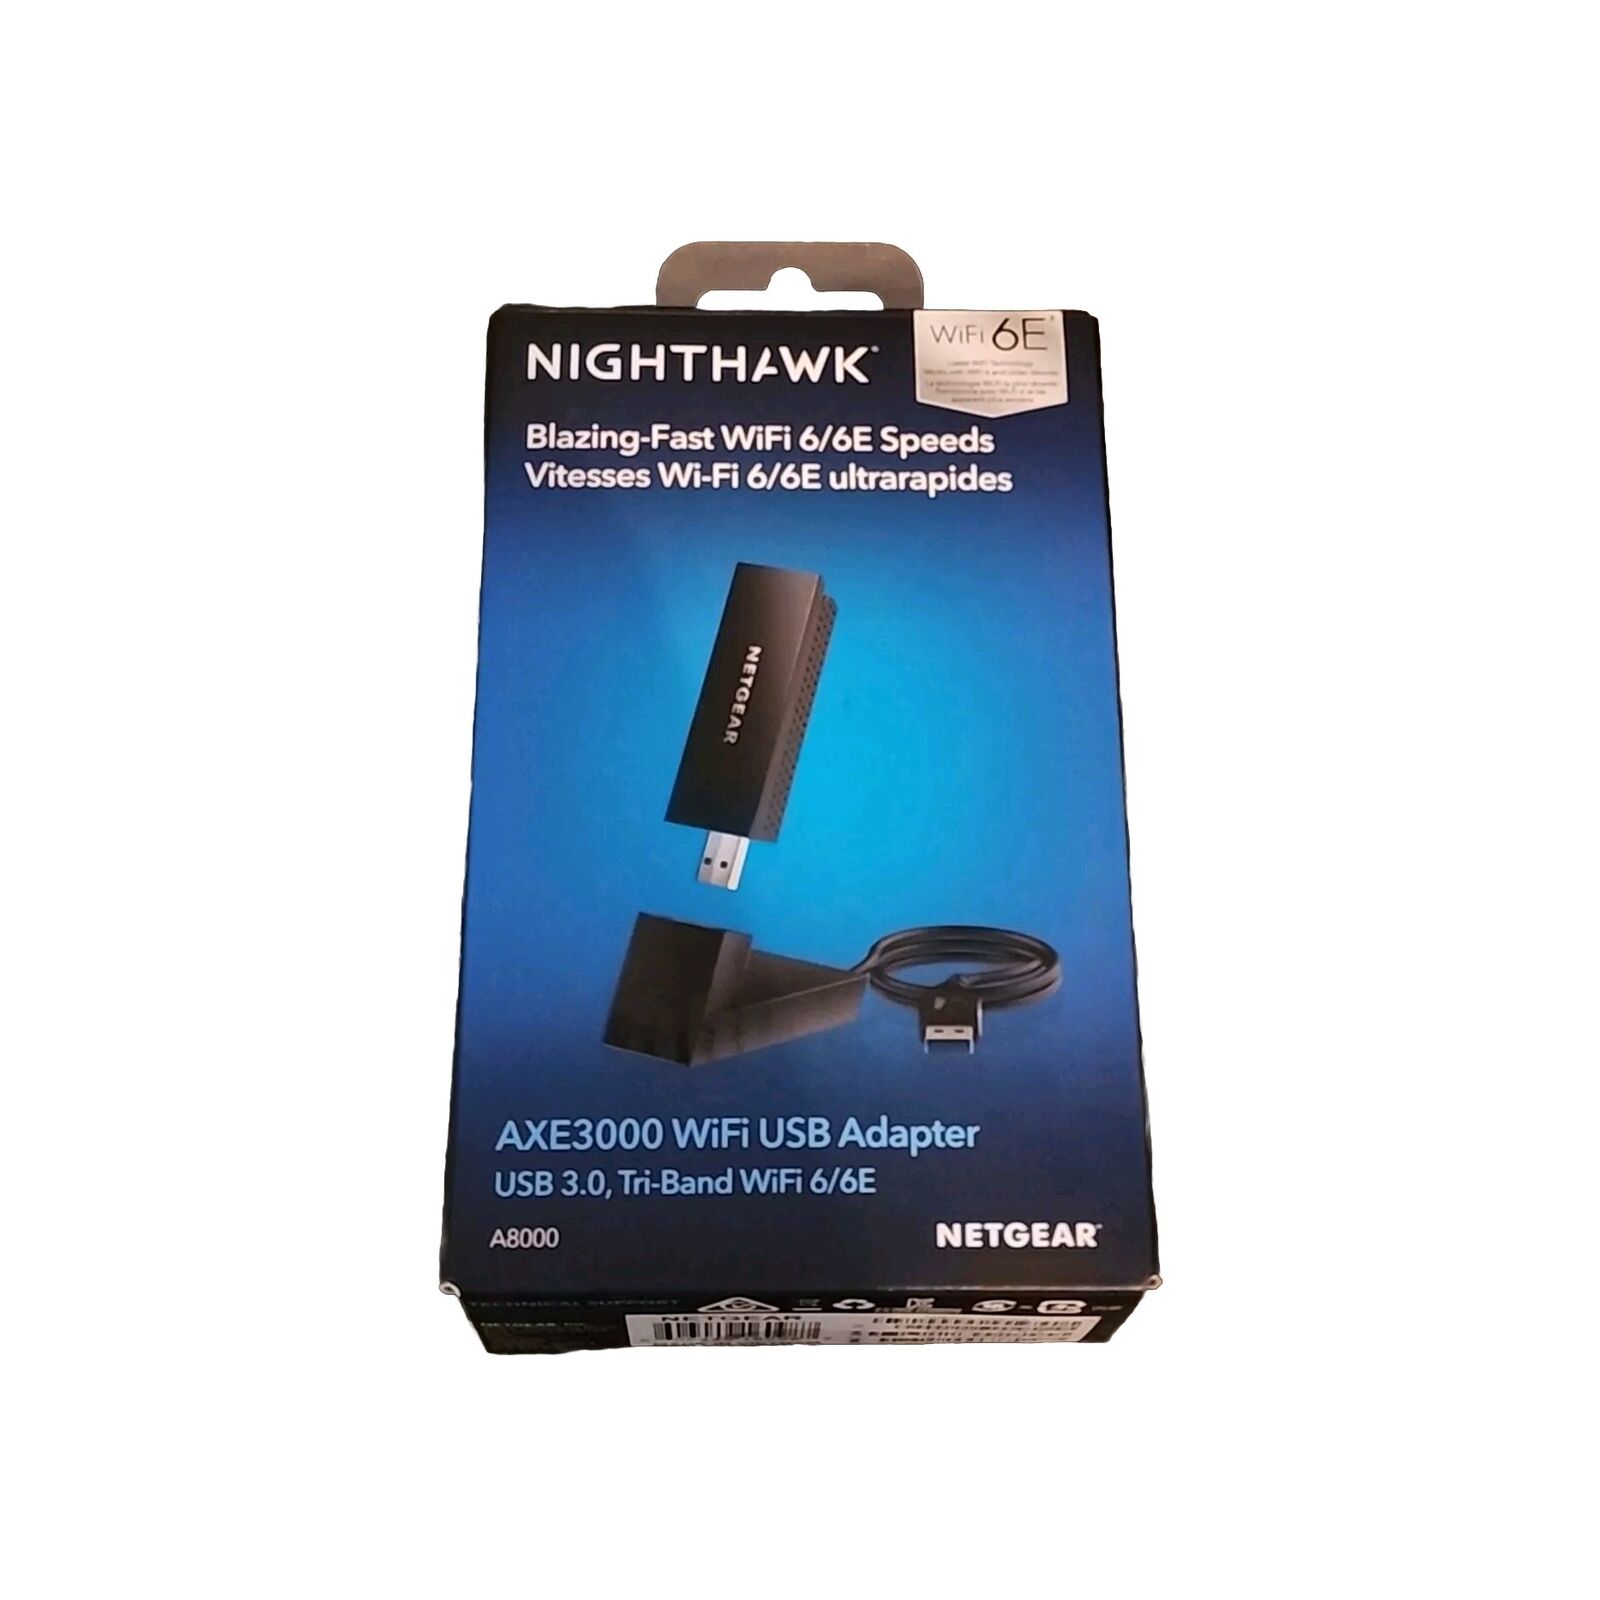 NETGEAR Nighthawk A8000 AXE3000 Tri-Band Wi-Fi 6E USB 3.0 Adapter (E10025985)